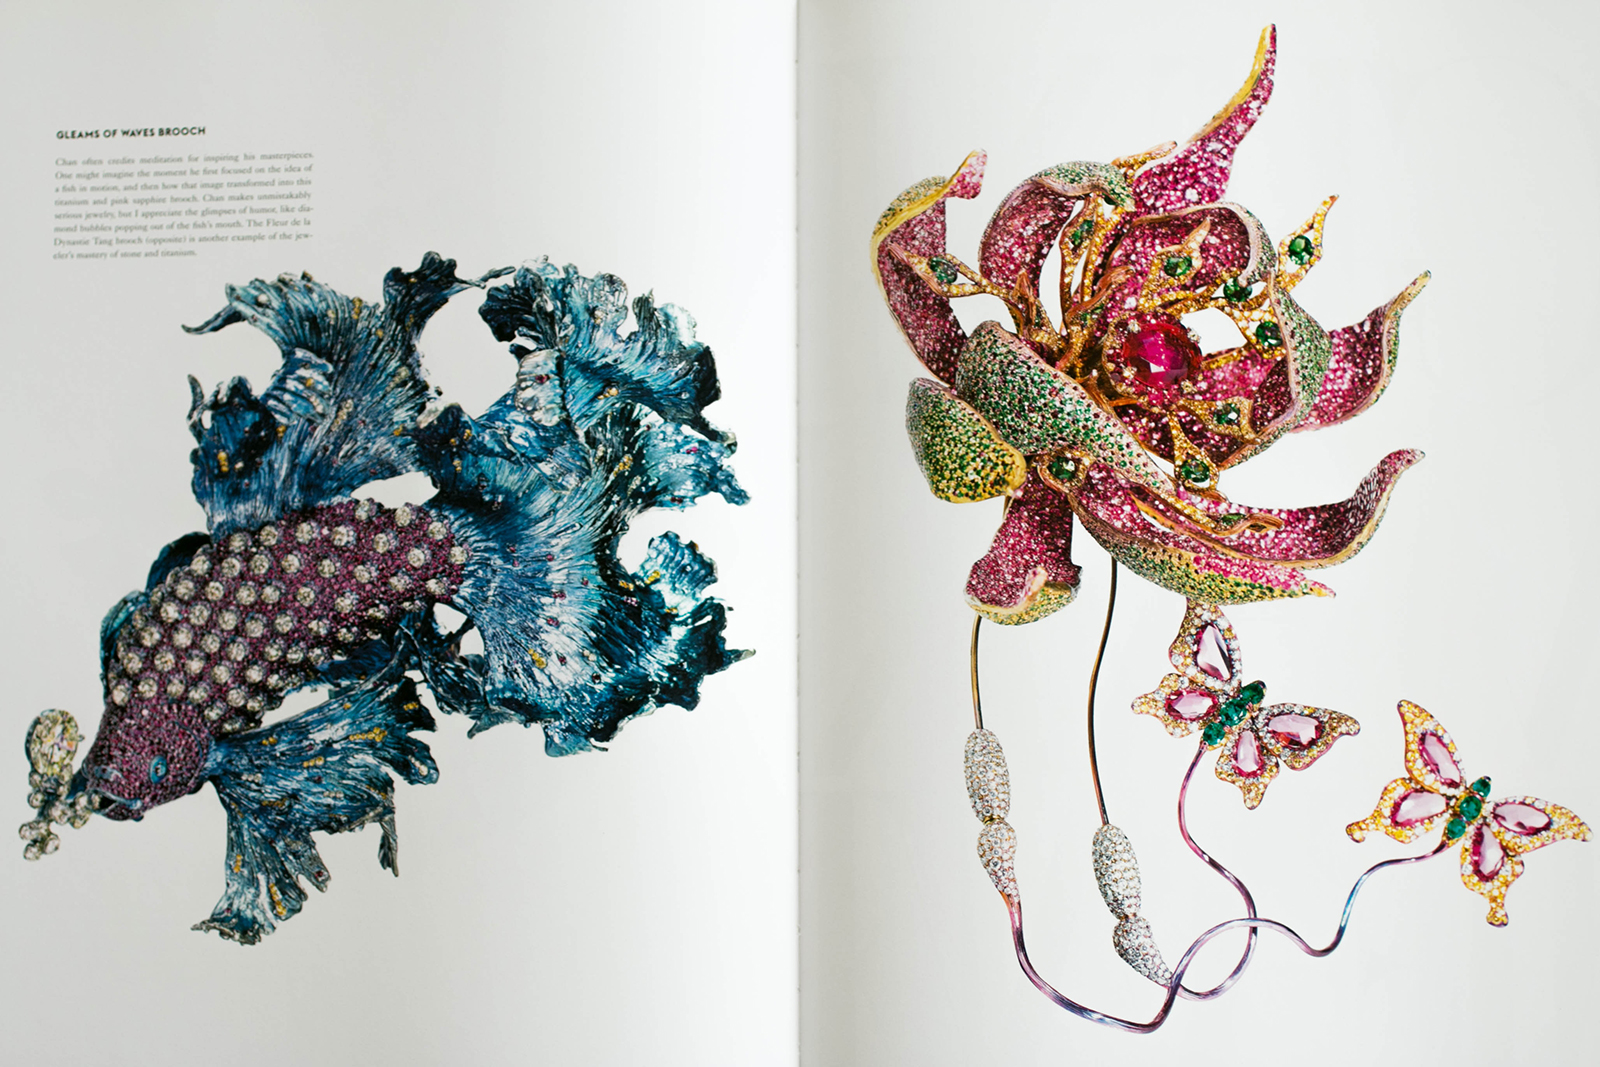 Wallace Chan jewellery in 'Jeweler' by Stellene Volandes